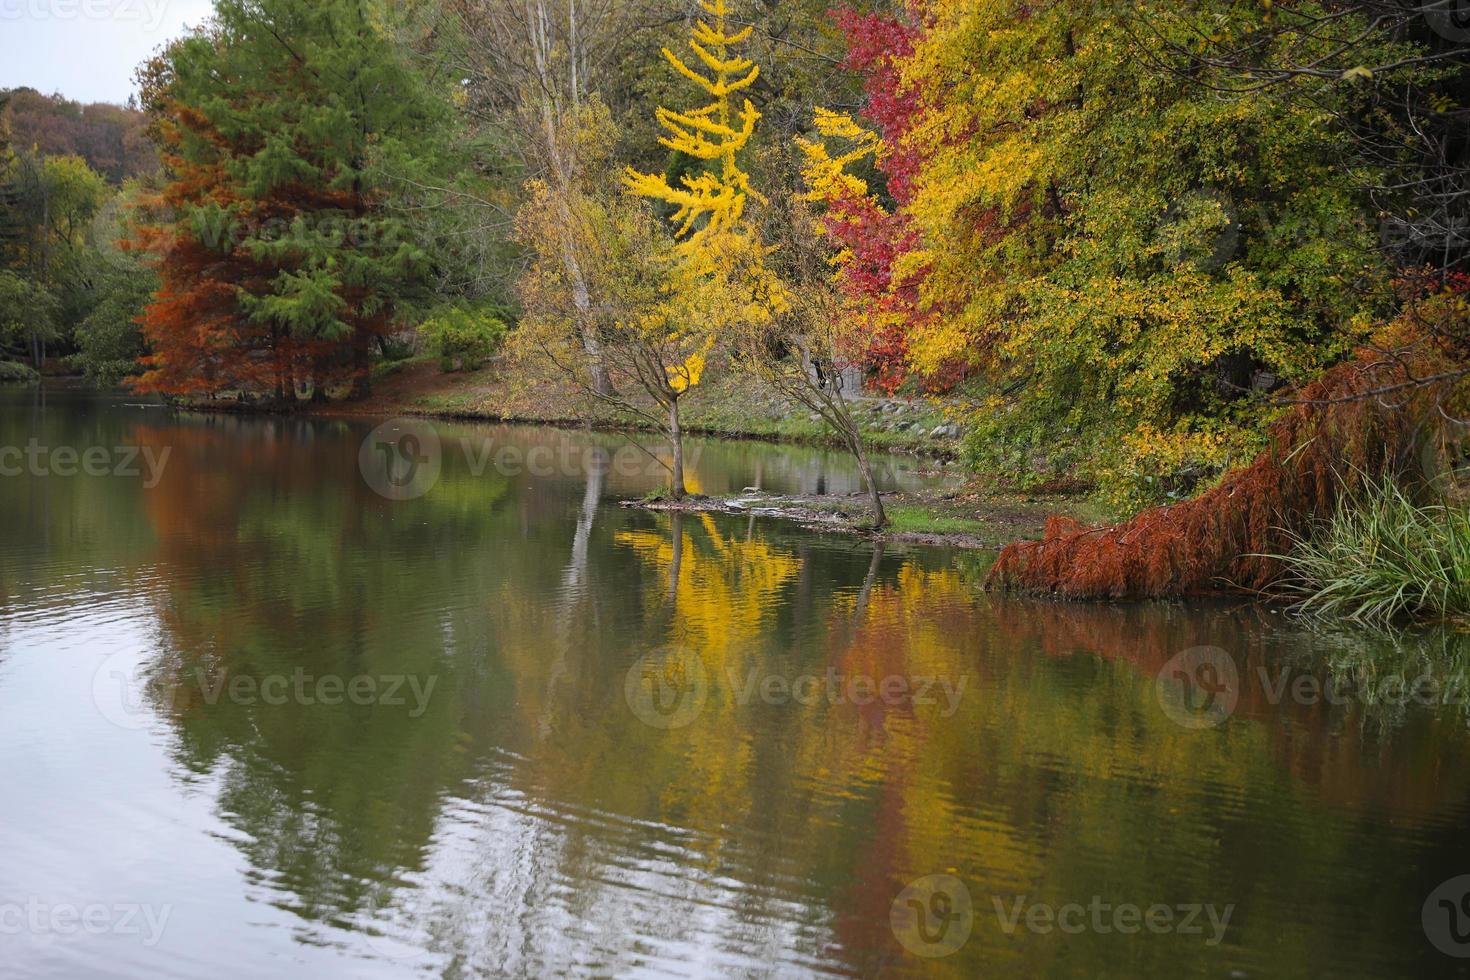 floresta e lago durante o outono foto